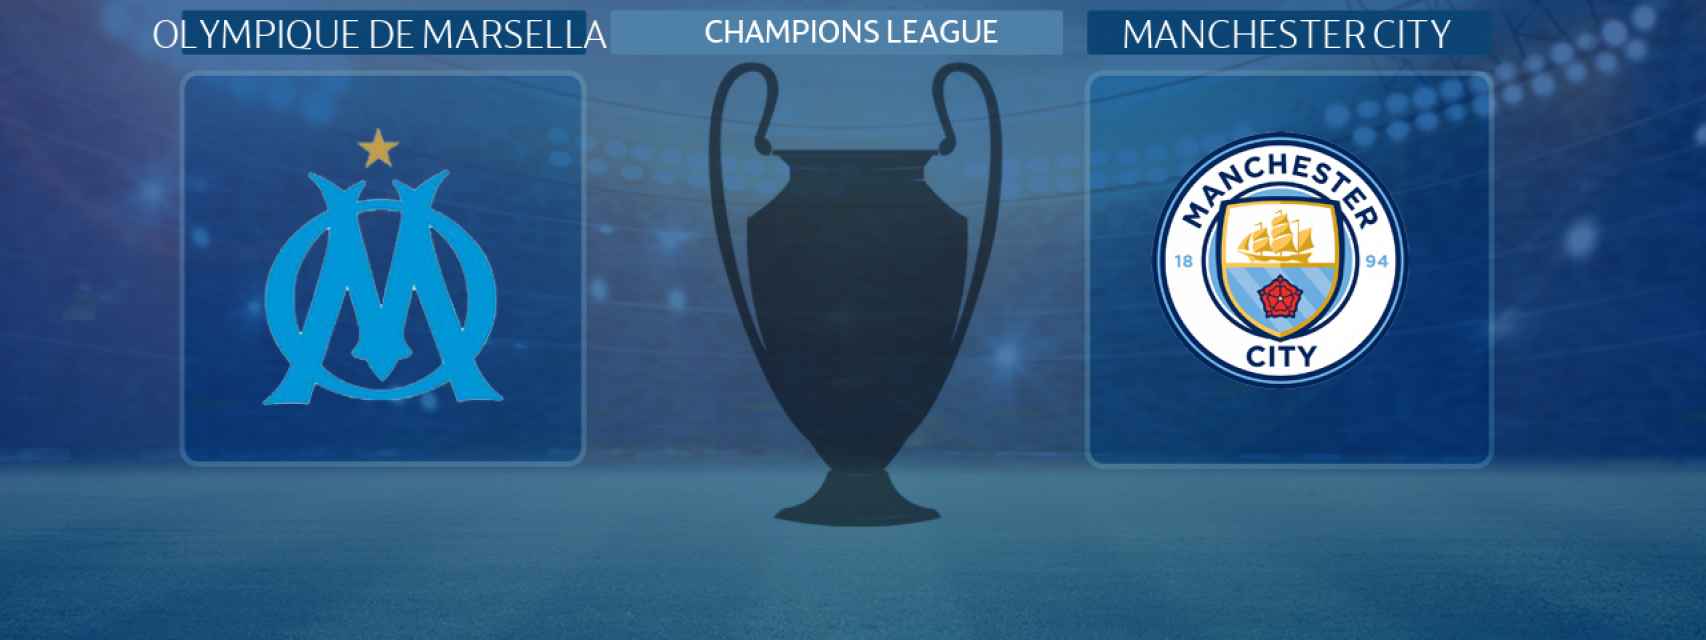 Olympique de Marsella - Manchester City, partido de la Champions League